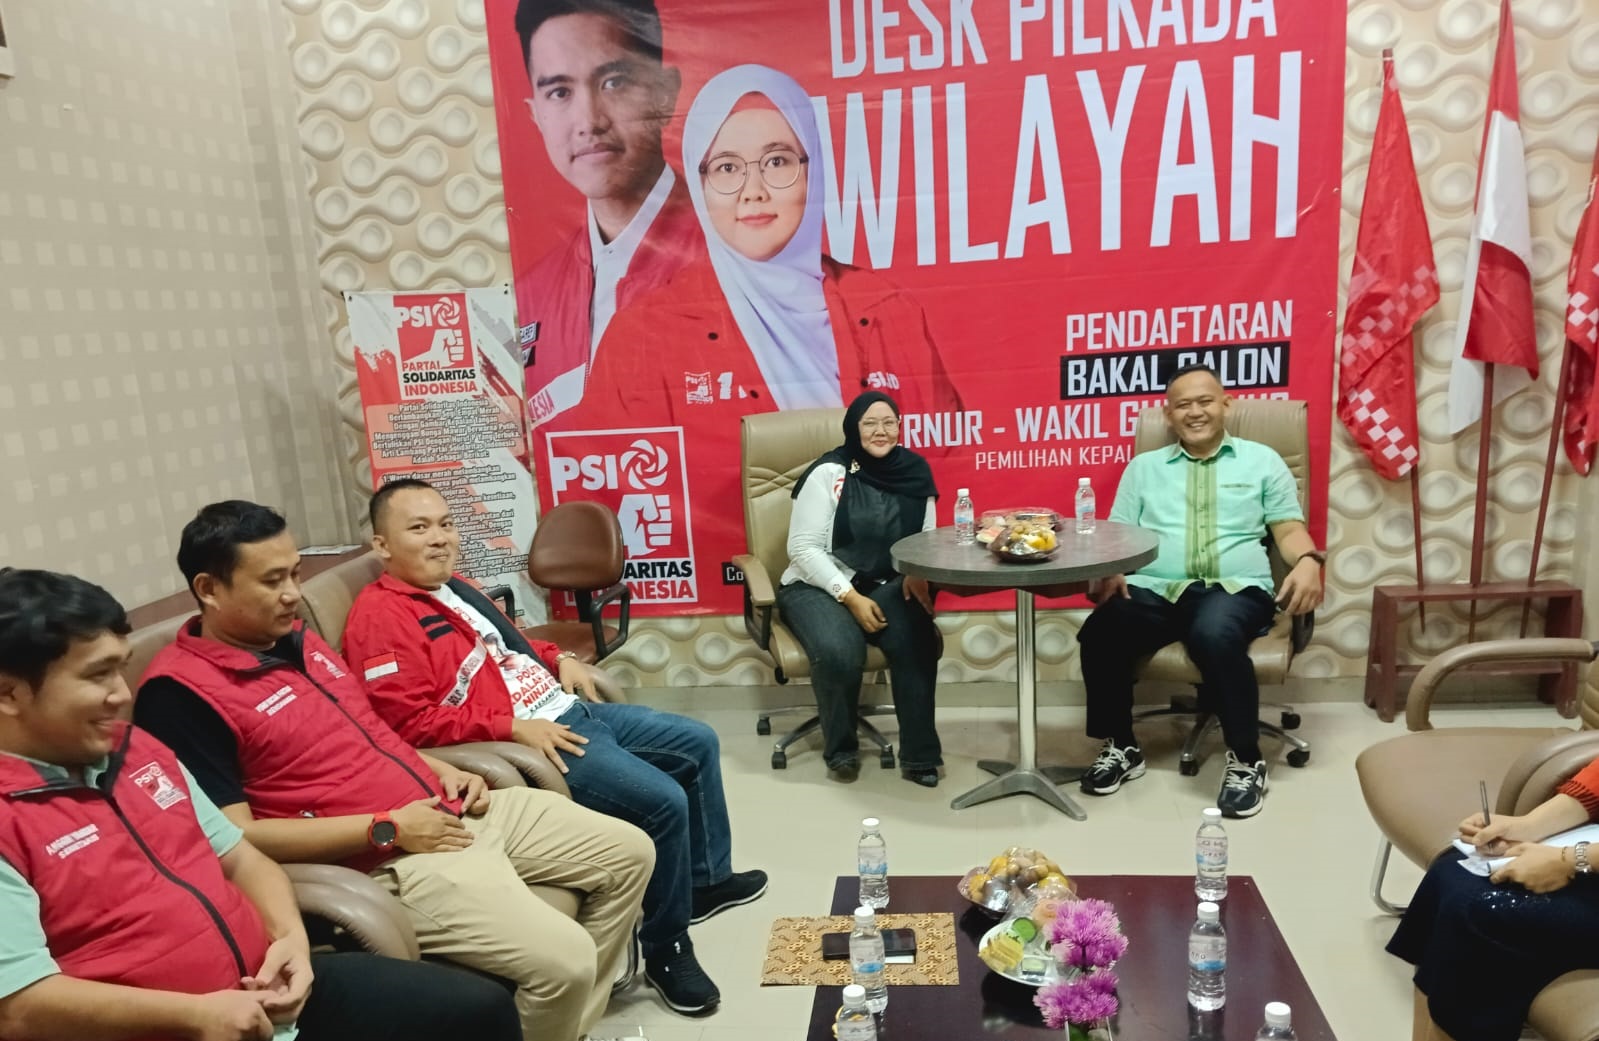 Balon Bupati Pringsewu Fauzi Sambangi Kantor DPW PSI Lampung, Tiza: Santai Tapi 'Full Daging'